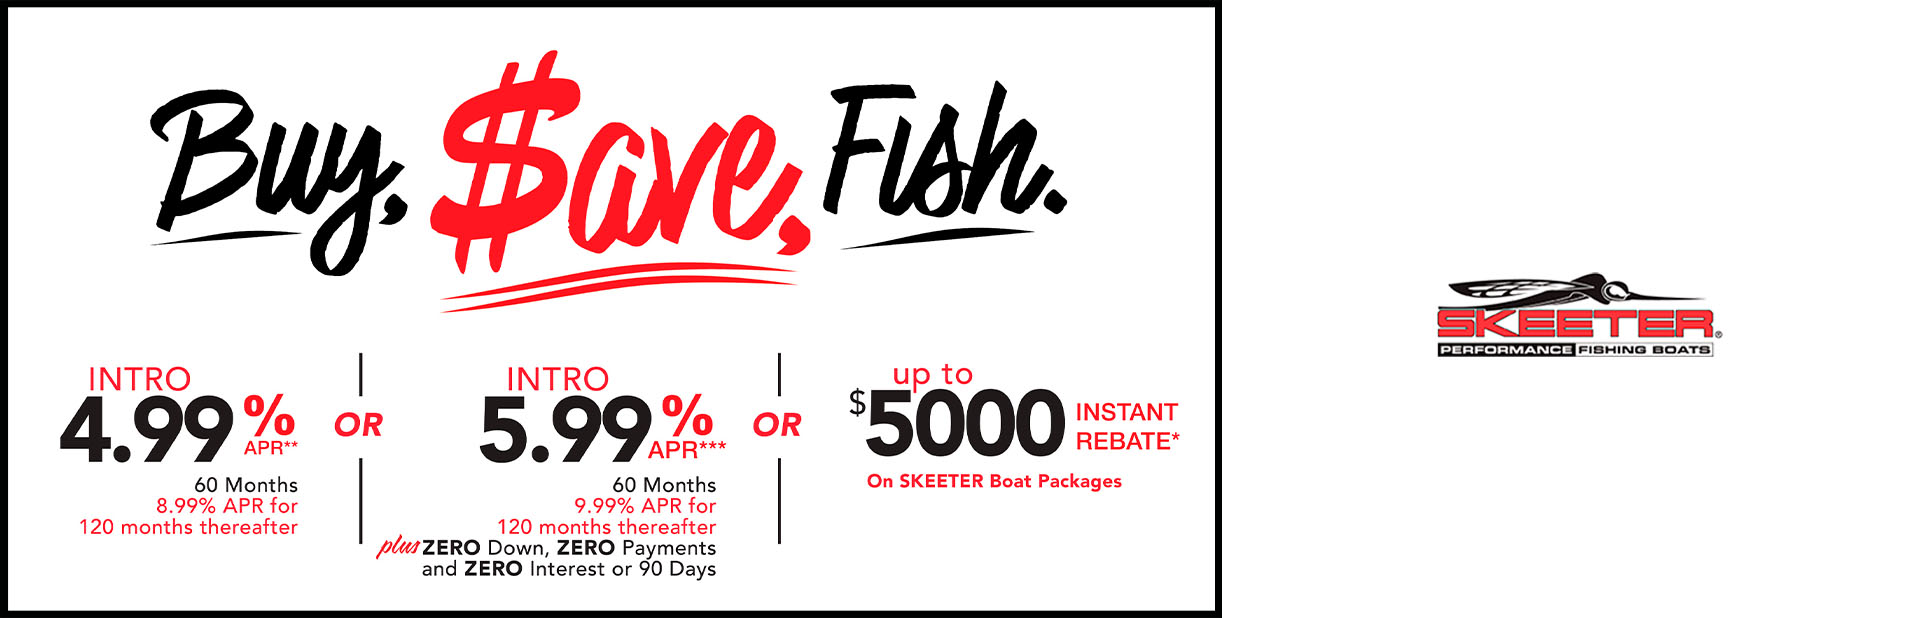 Buy, Save, Fish.